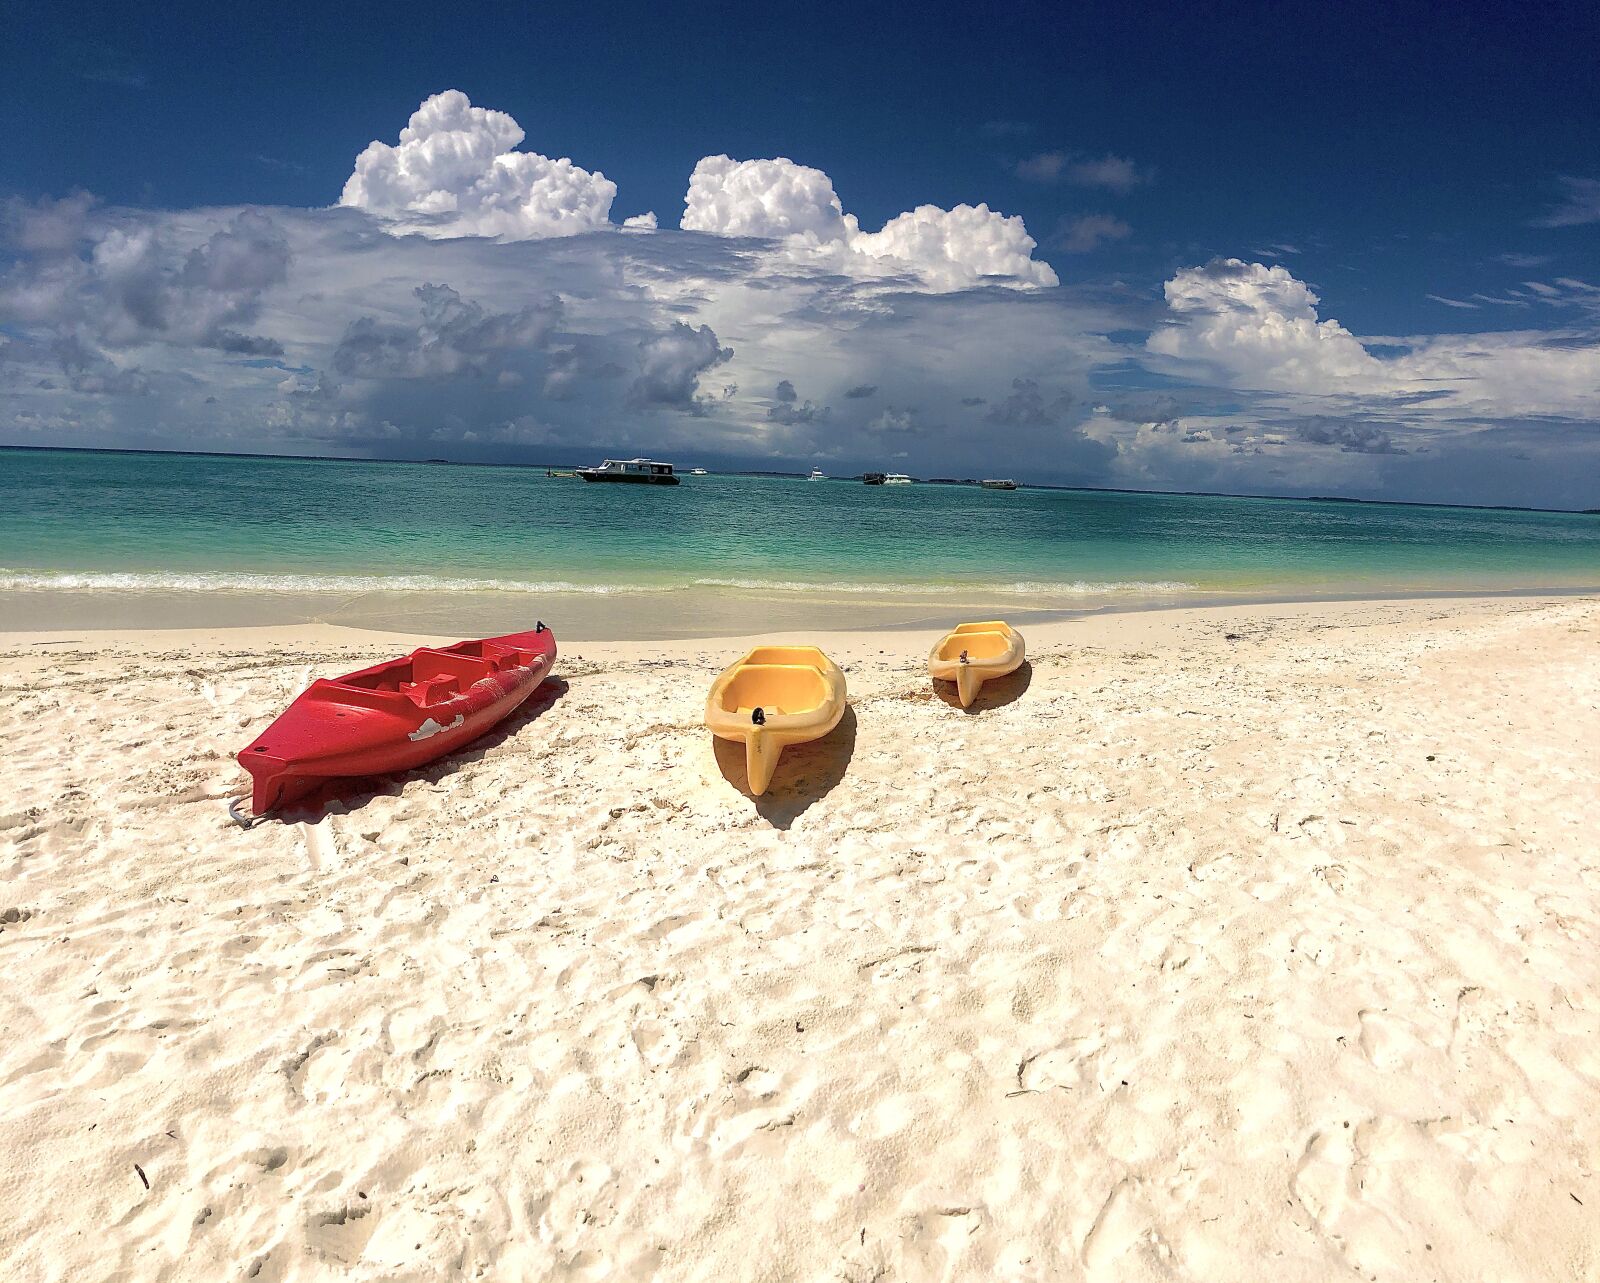 Apple iPhone X + iPhone X back camera 4mm f/1.8 sample photo. Maldives, boats, sea photography